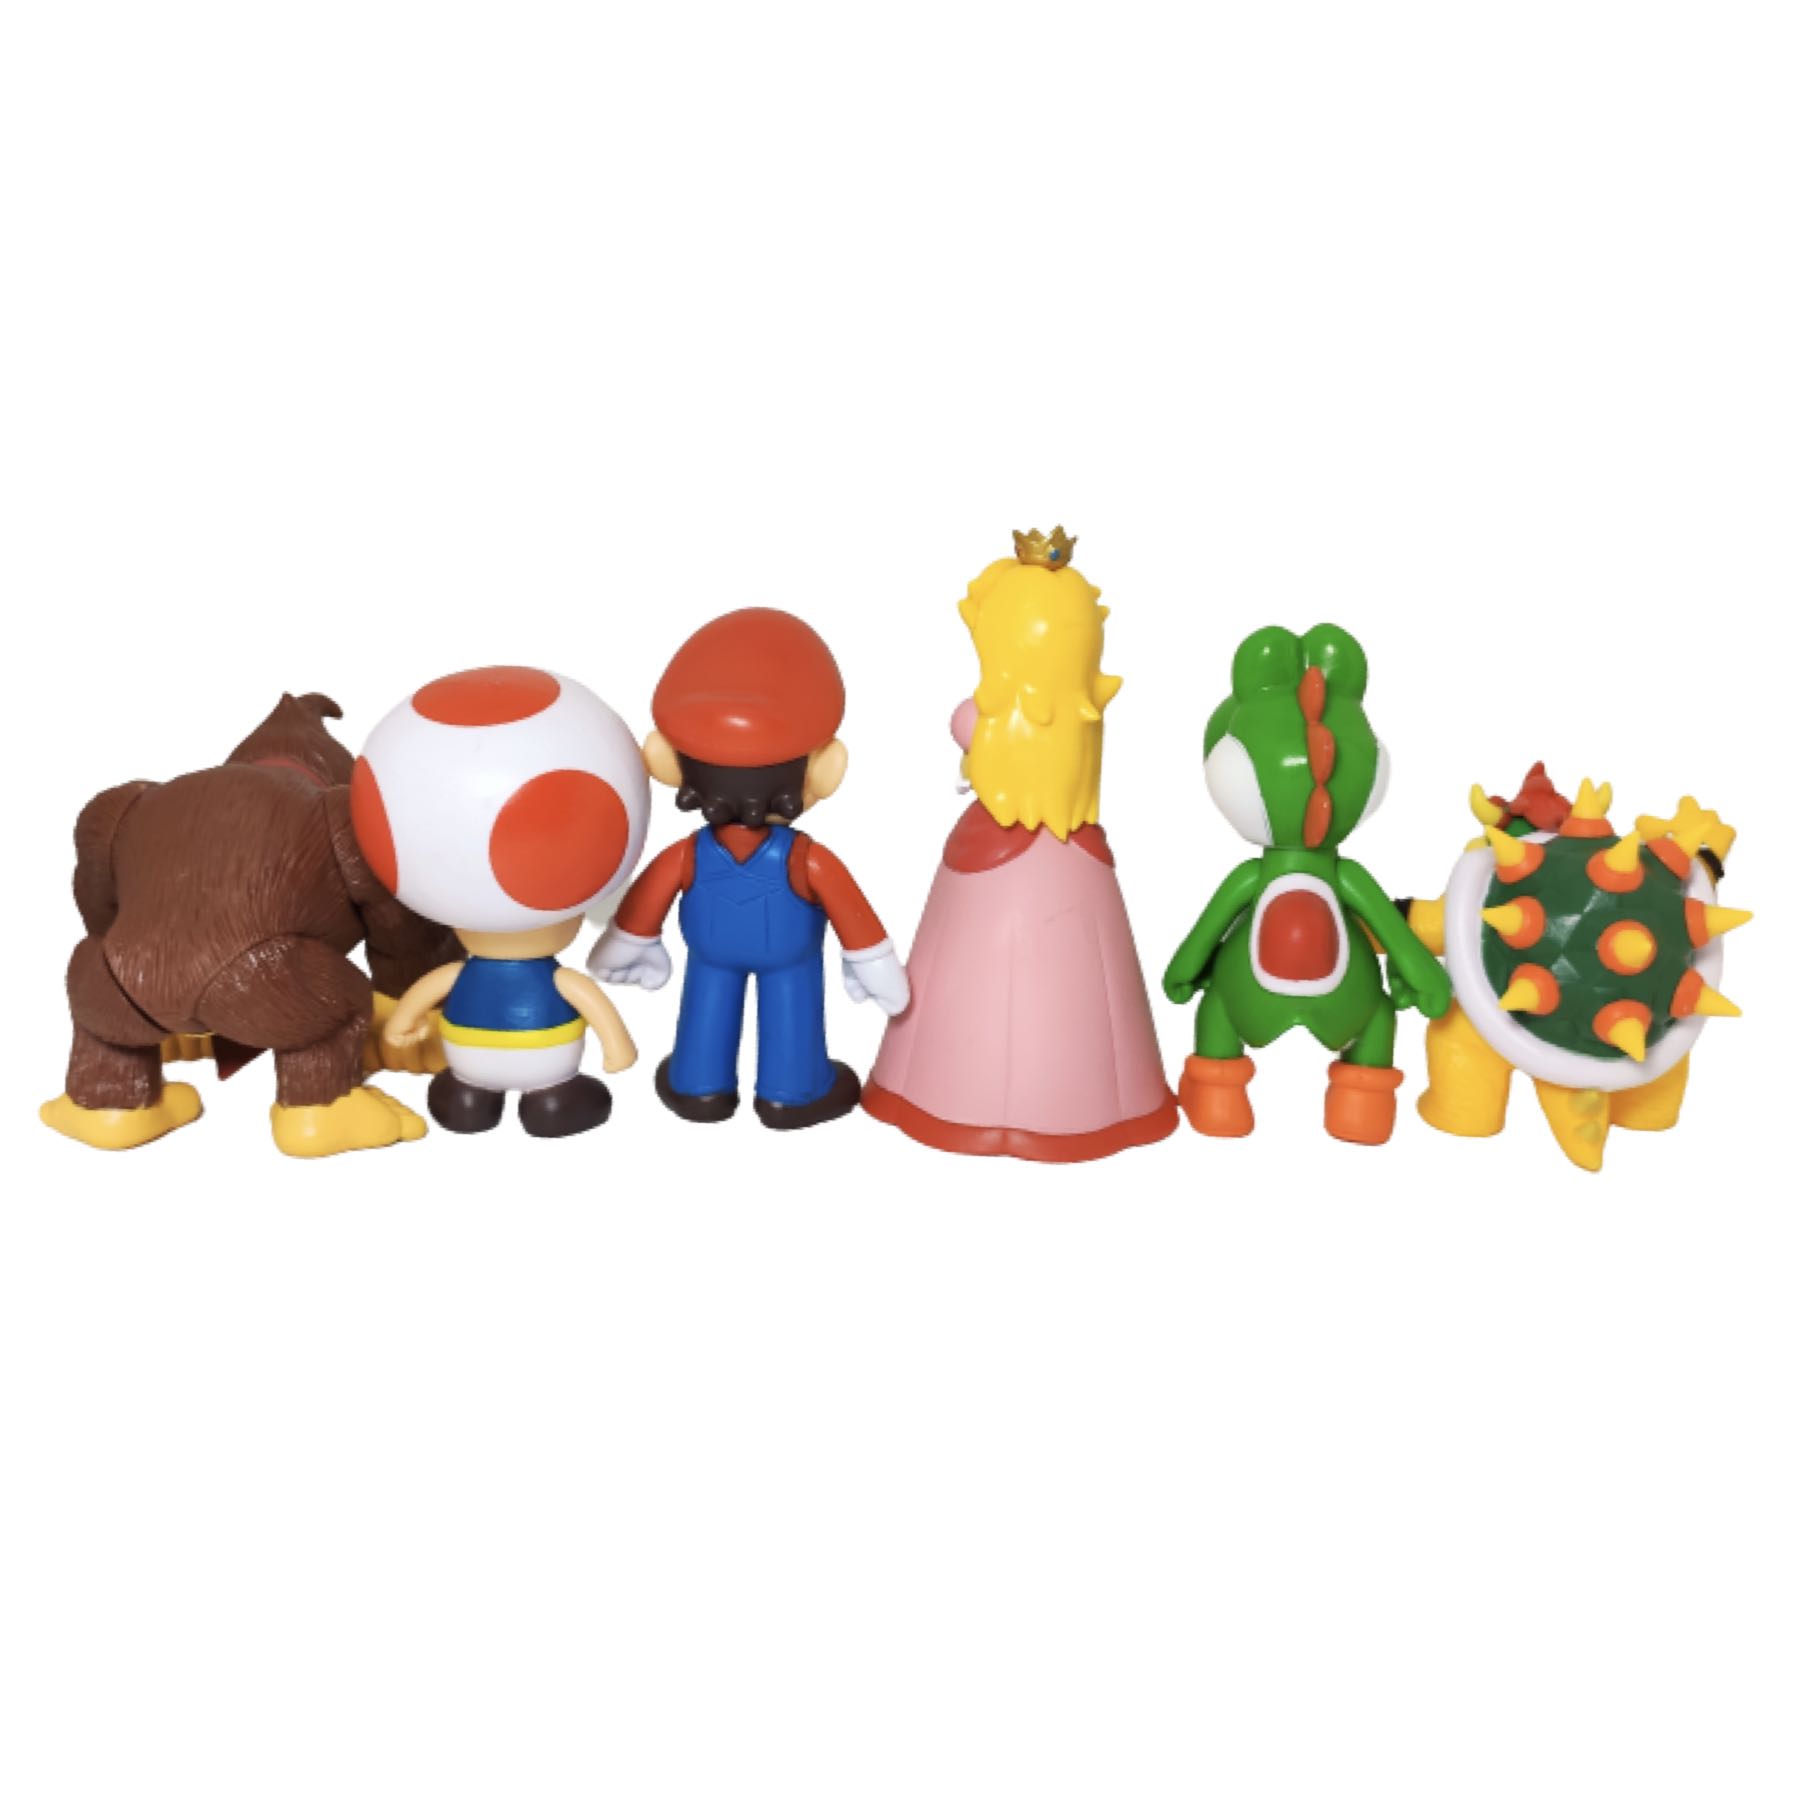 Set de Figuras Mario Bros 6pzs Juguetes Bowser Peach Yoshi Hongo Toad  Donkey Kong Pack